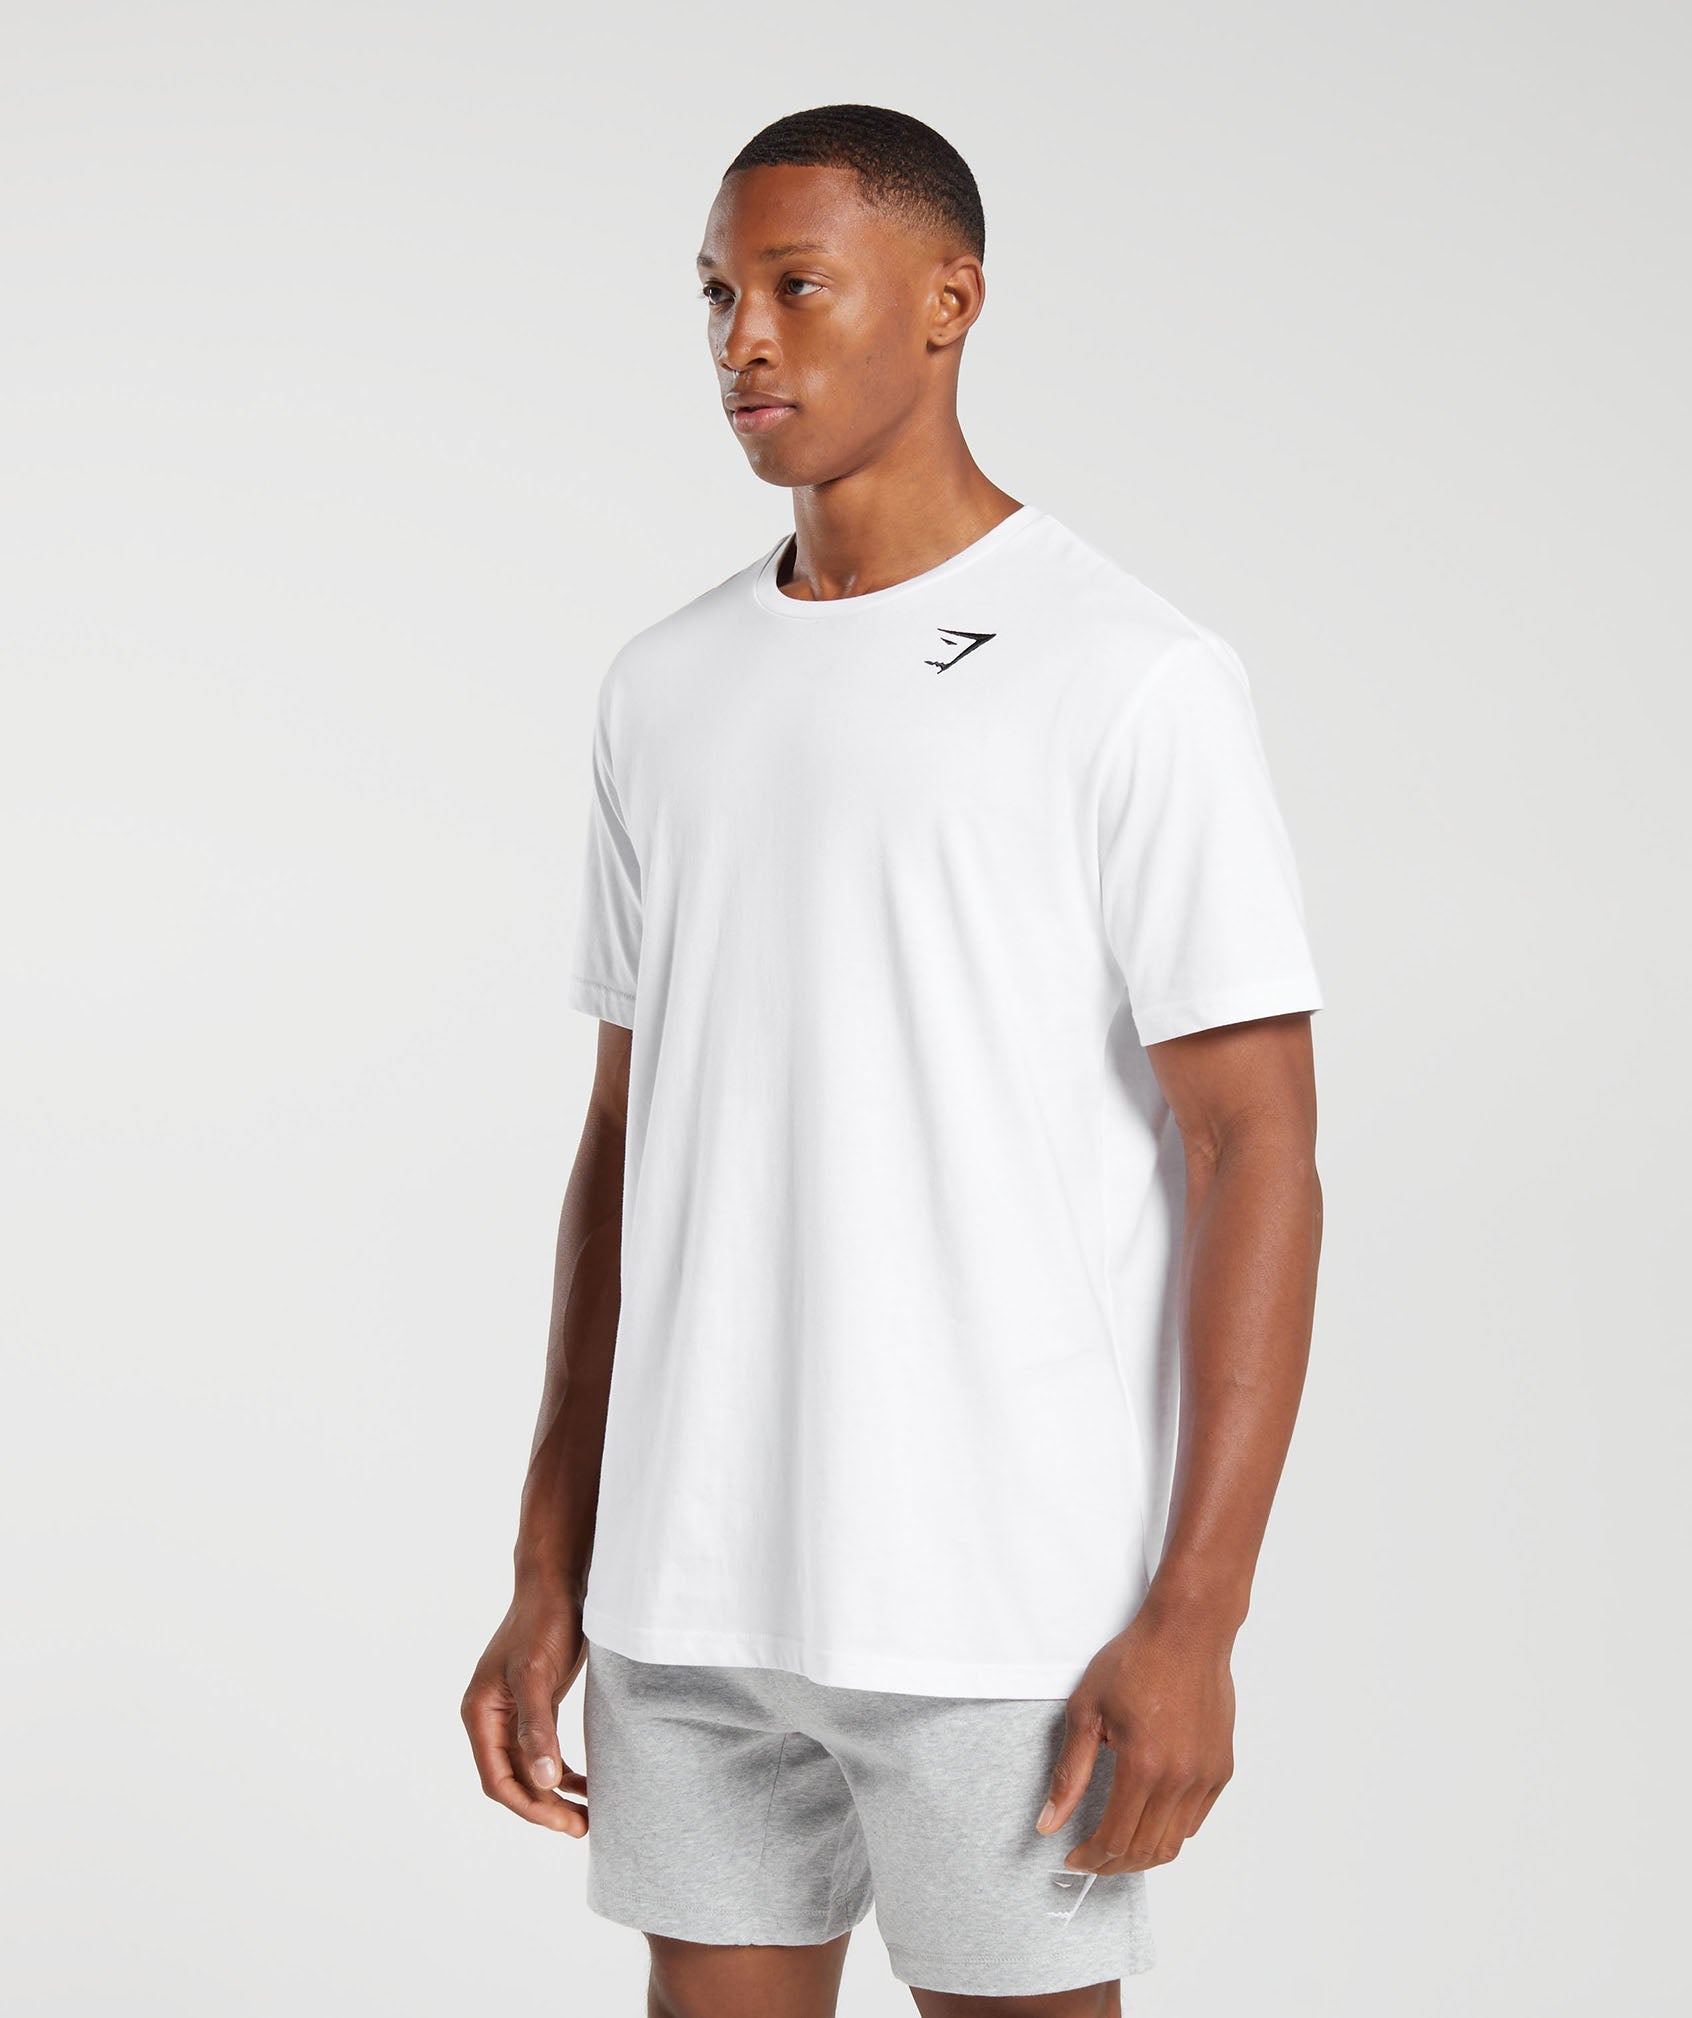 Crest T-Shirt in White